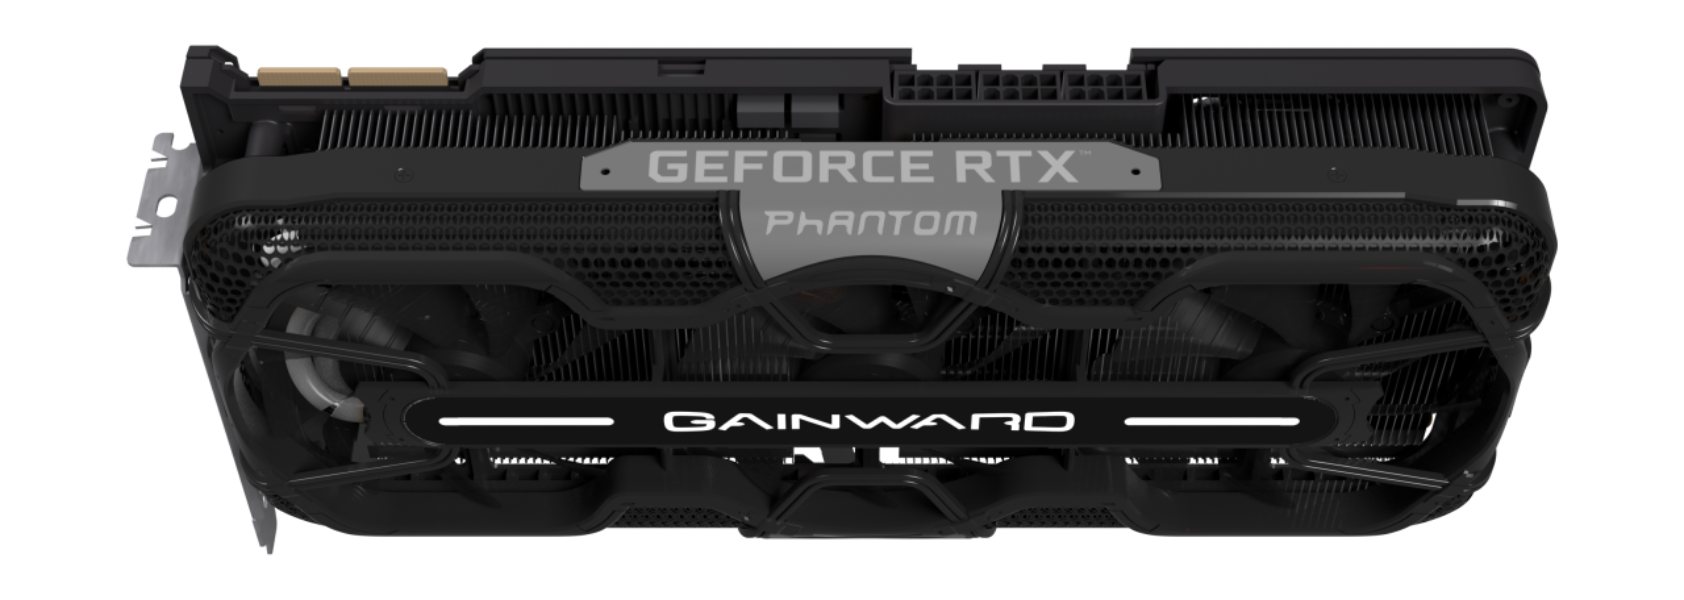 GAINWARD Phantom, serie RTX 3000 con un diseño único